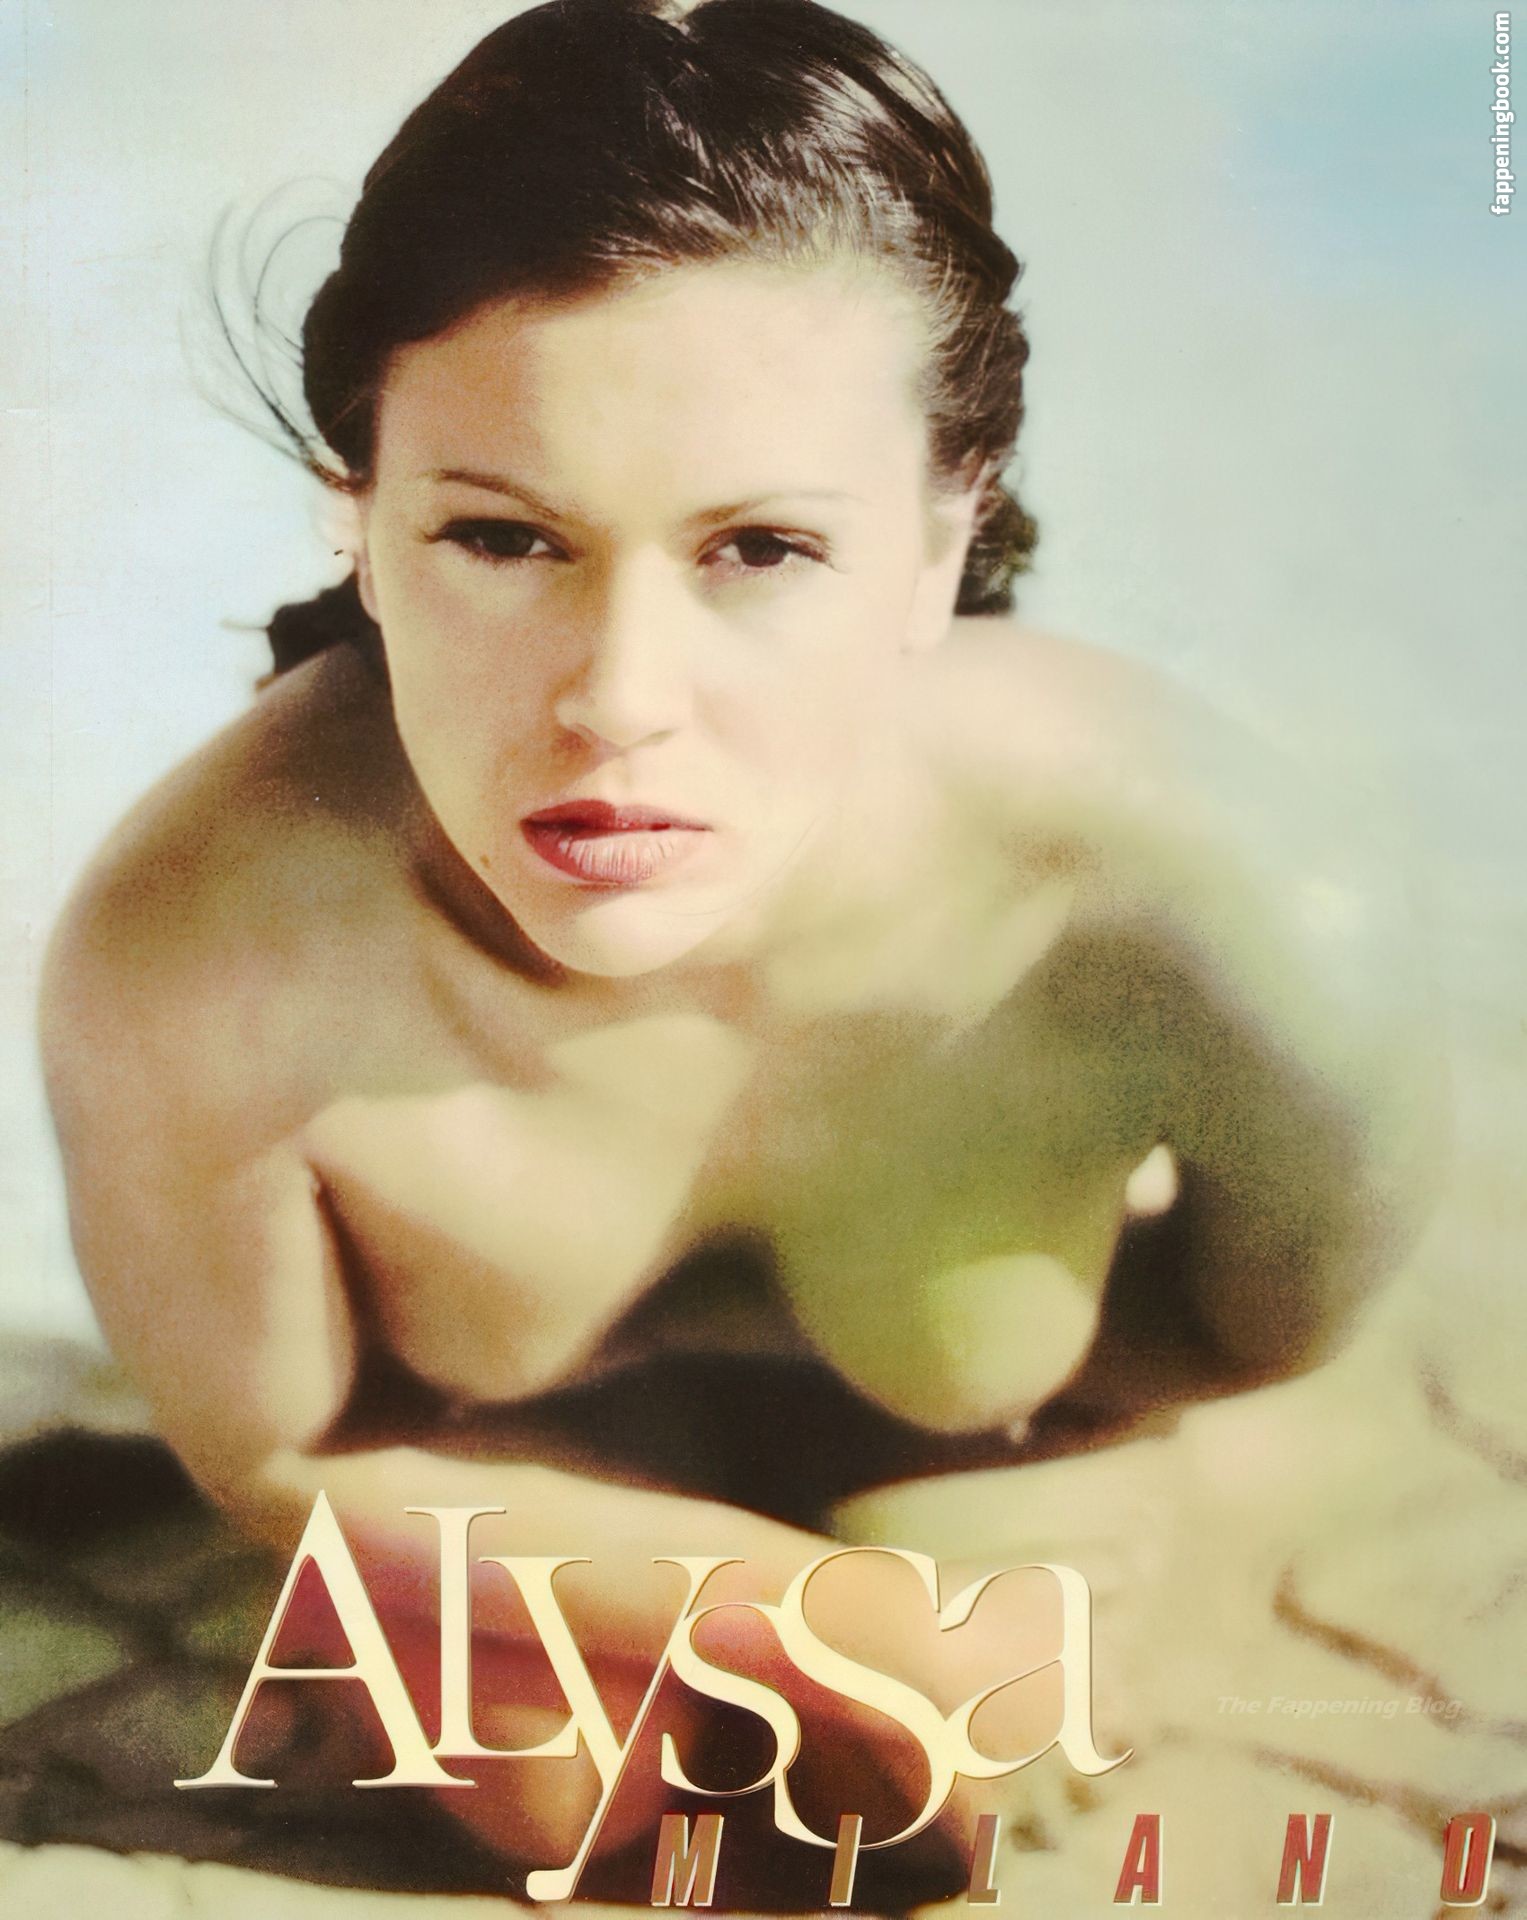 Alyssa Milano Nude, The Fappening - Photo #1297068 - FappeningBook